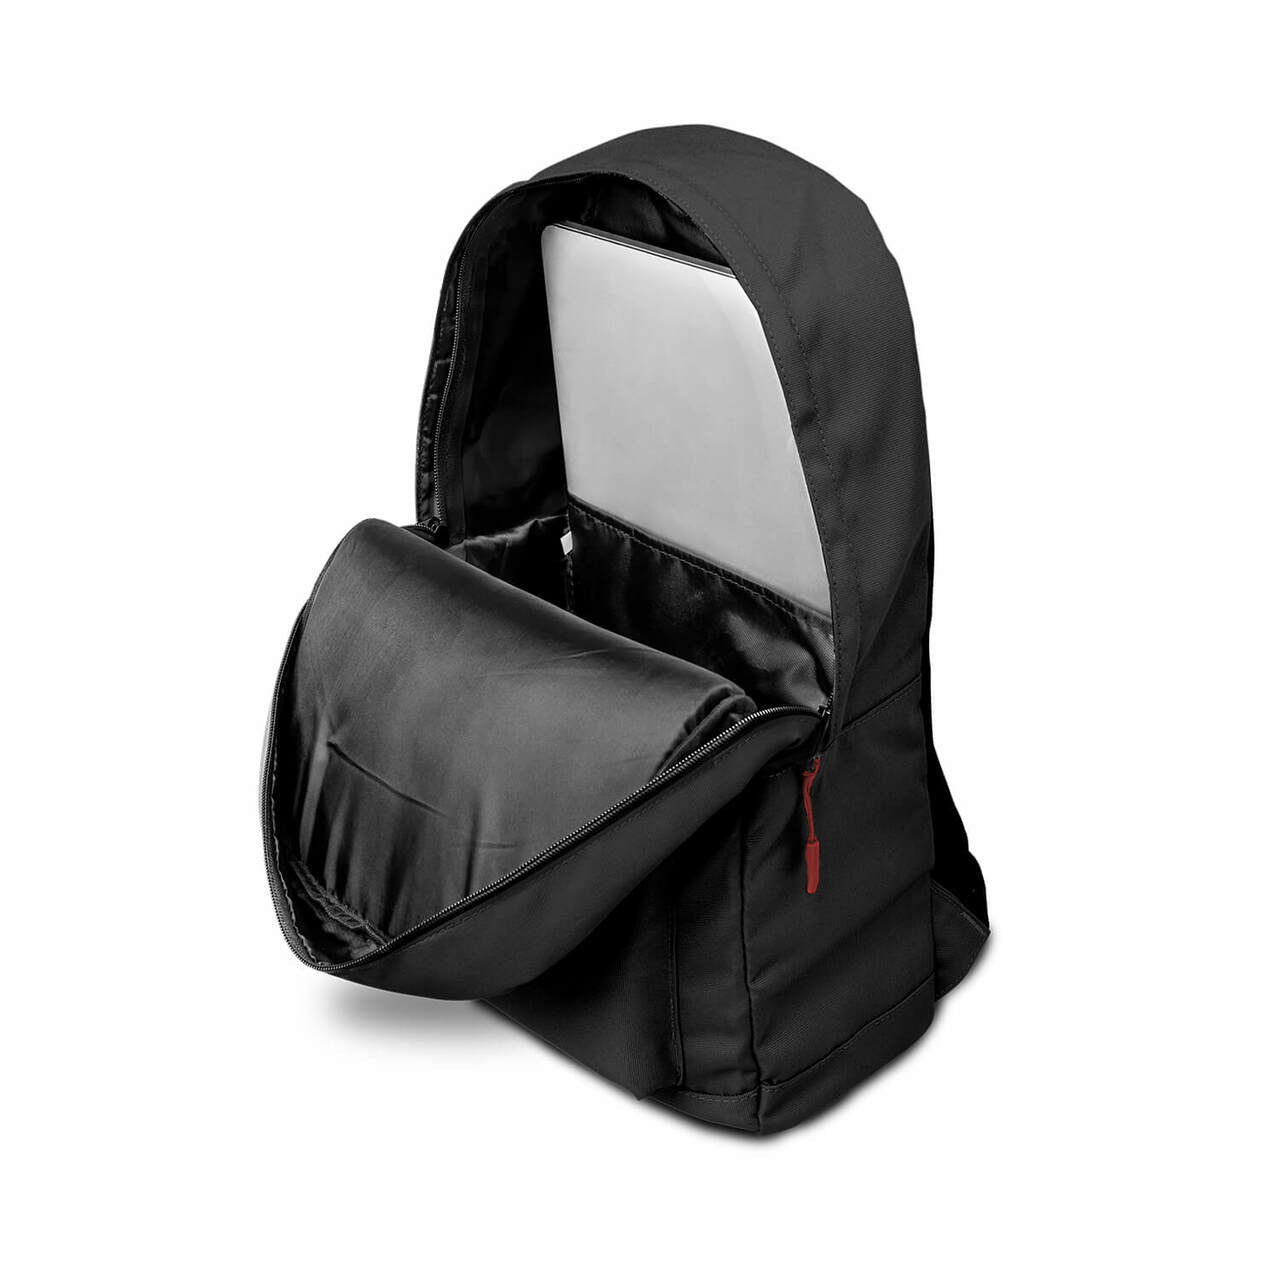 Detroit Red Wings Campus Laptop Backpack- Black